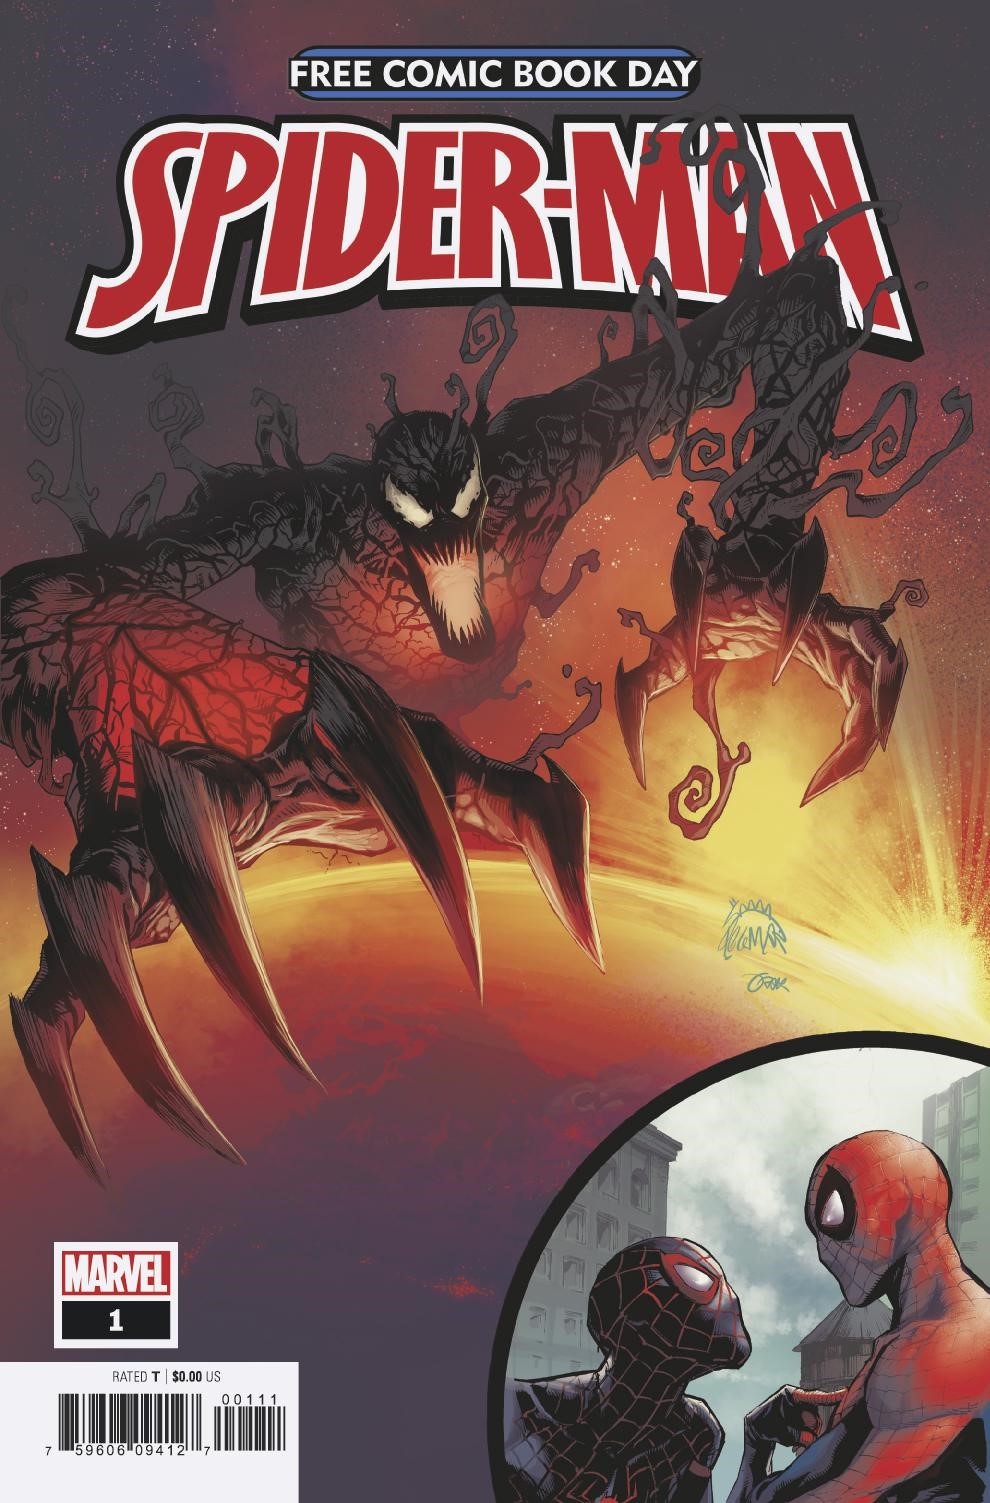 Image result for free comicbook day spider-man venom